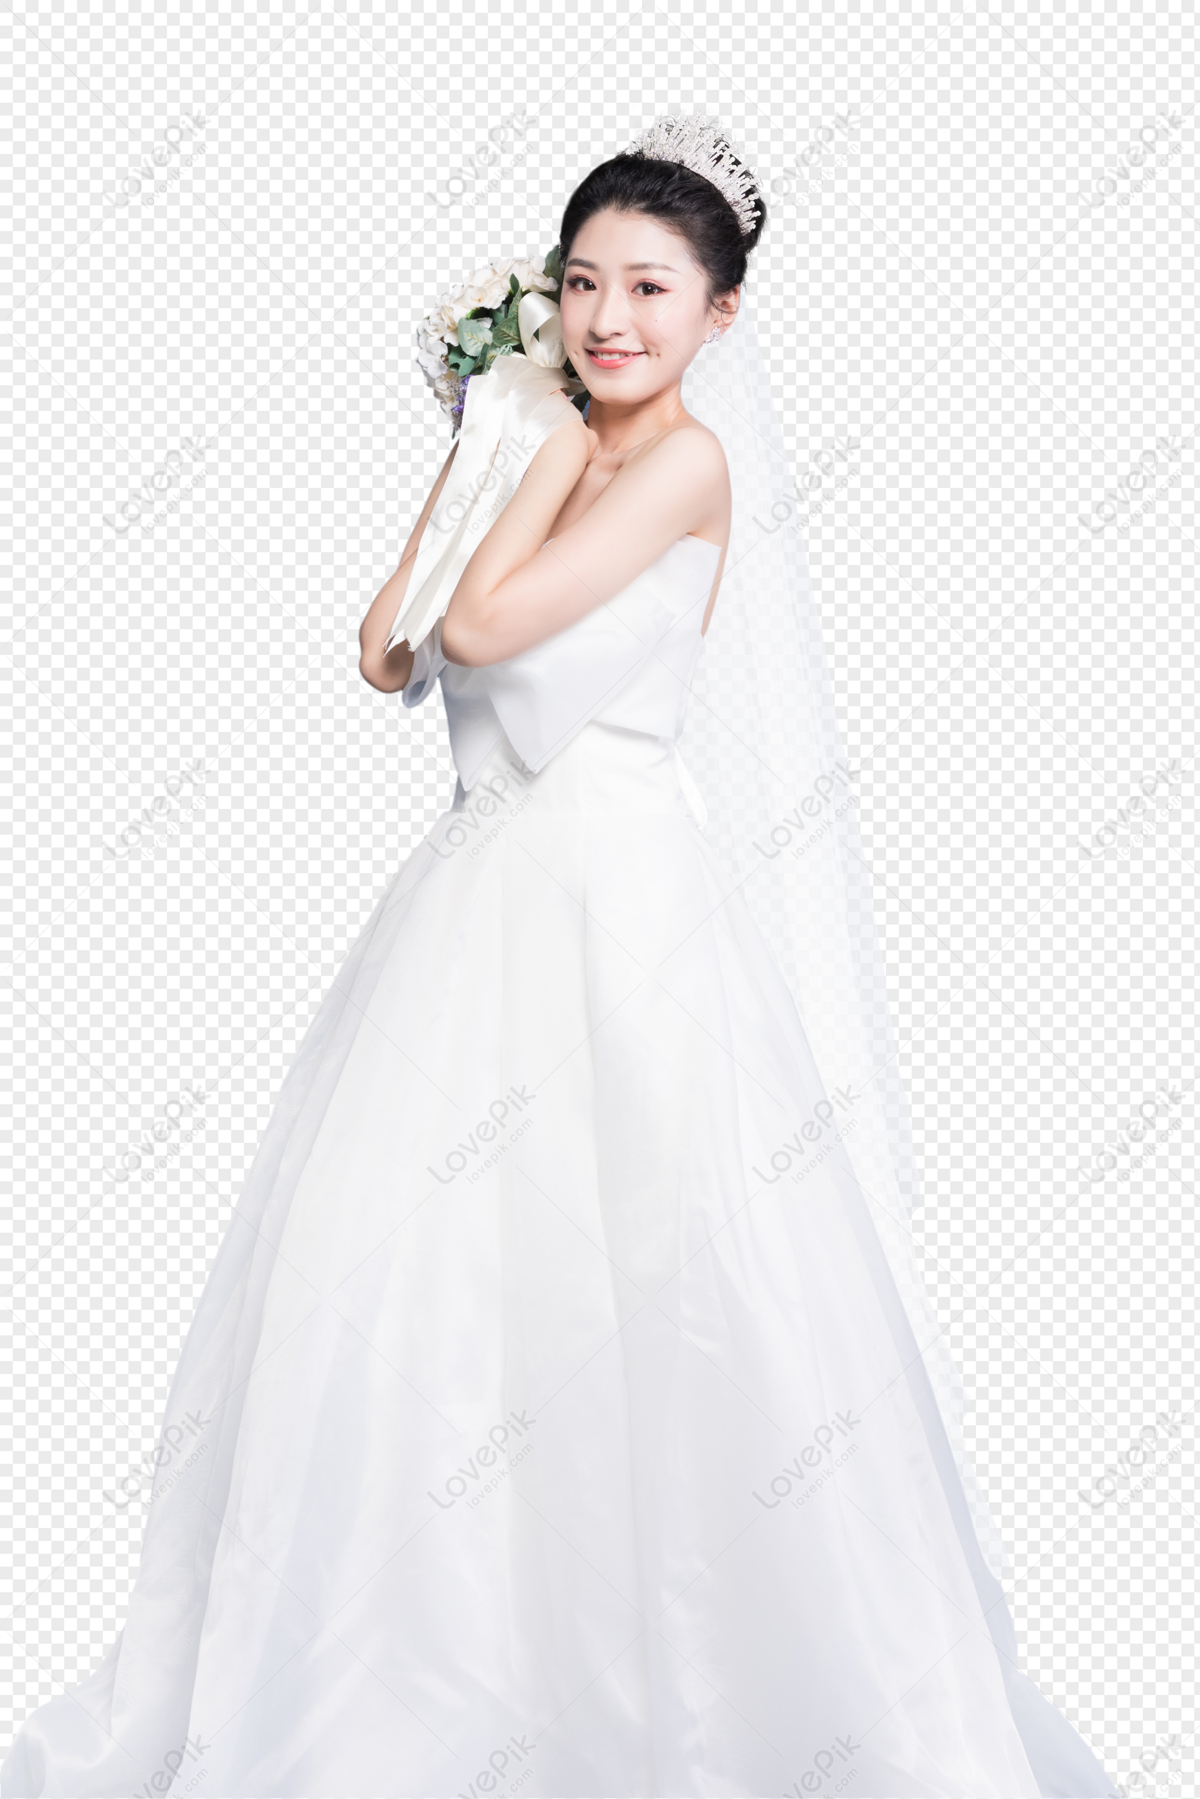 Toilet Paper Wedding Dresses - Cheap DIYs